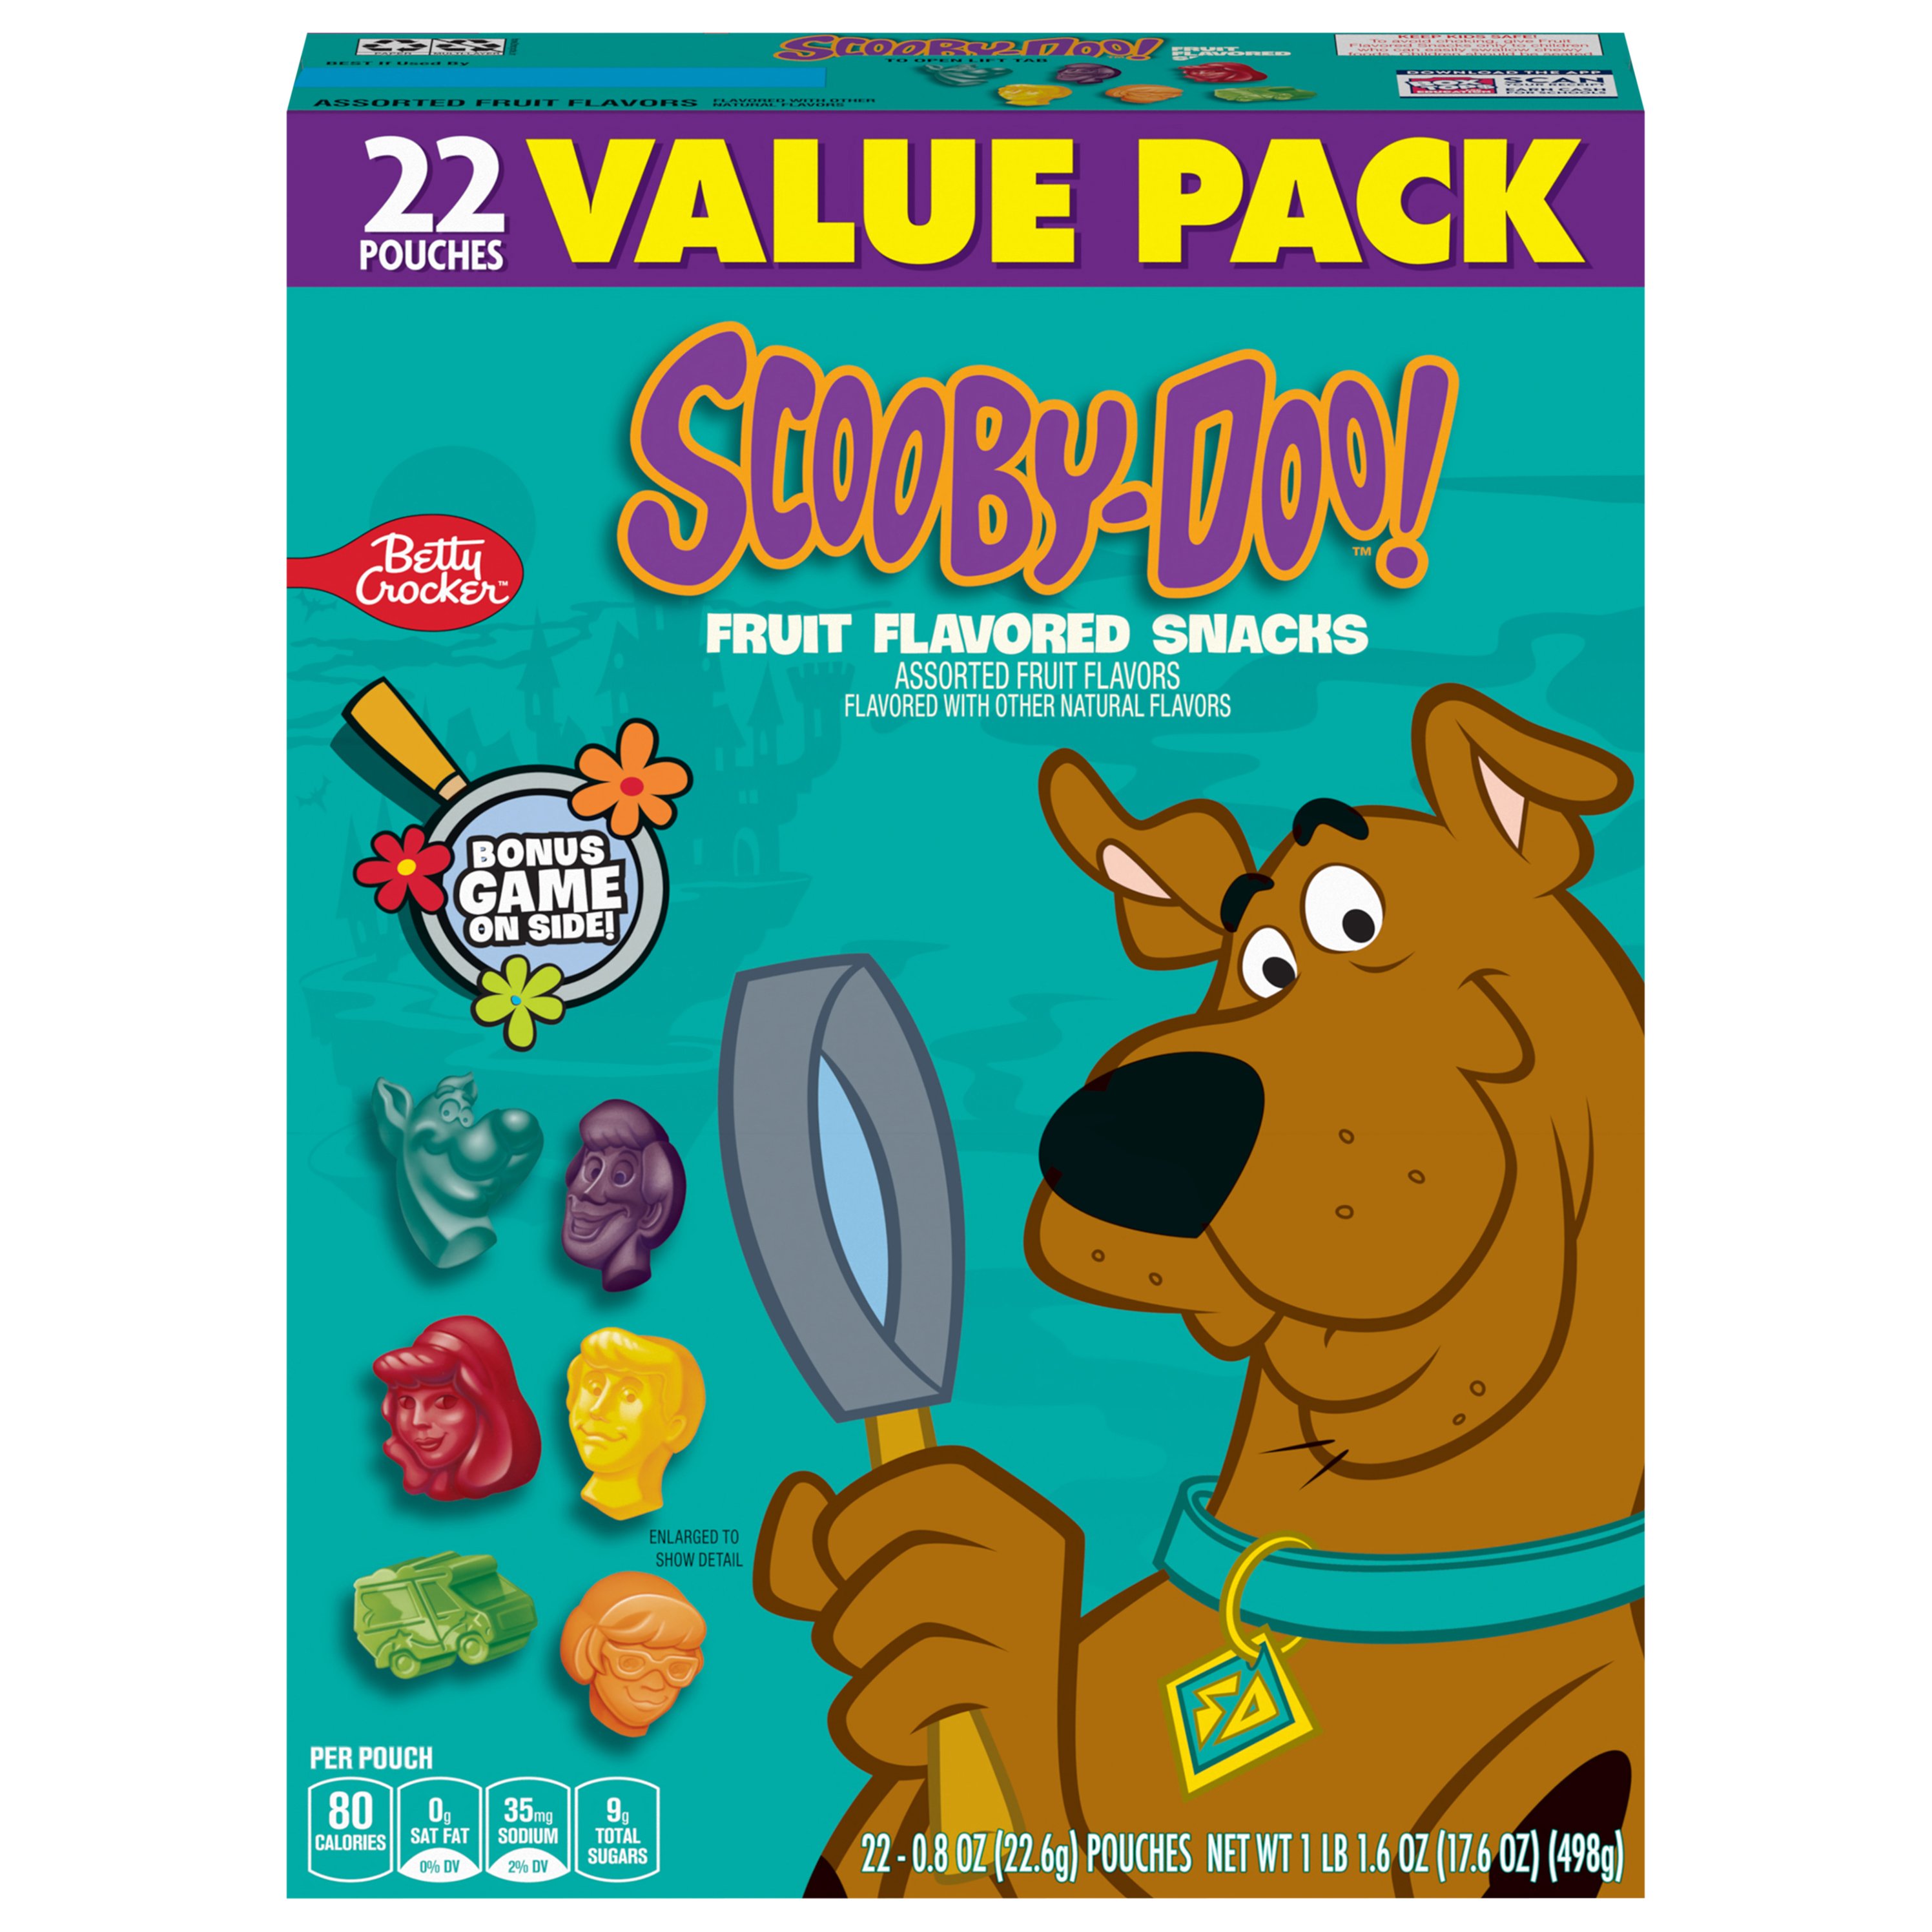 Betty Crocker Scooby Doo Fruit Flavored Snacks Shop Fruit Snacks At H E B